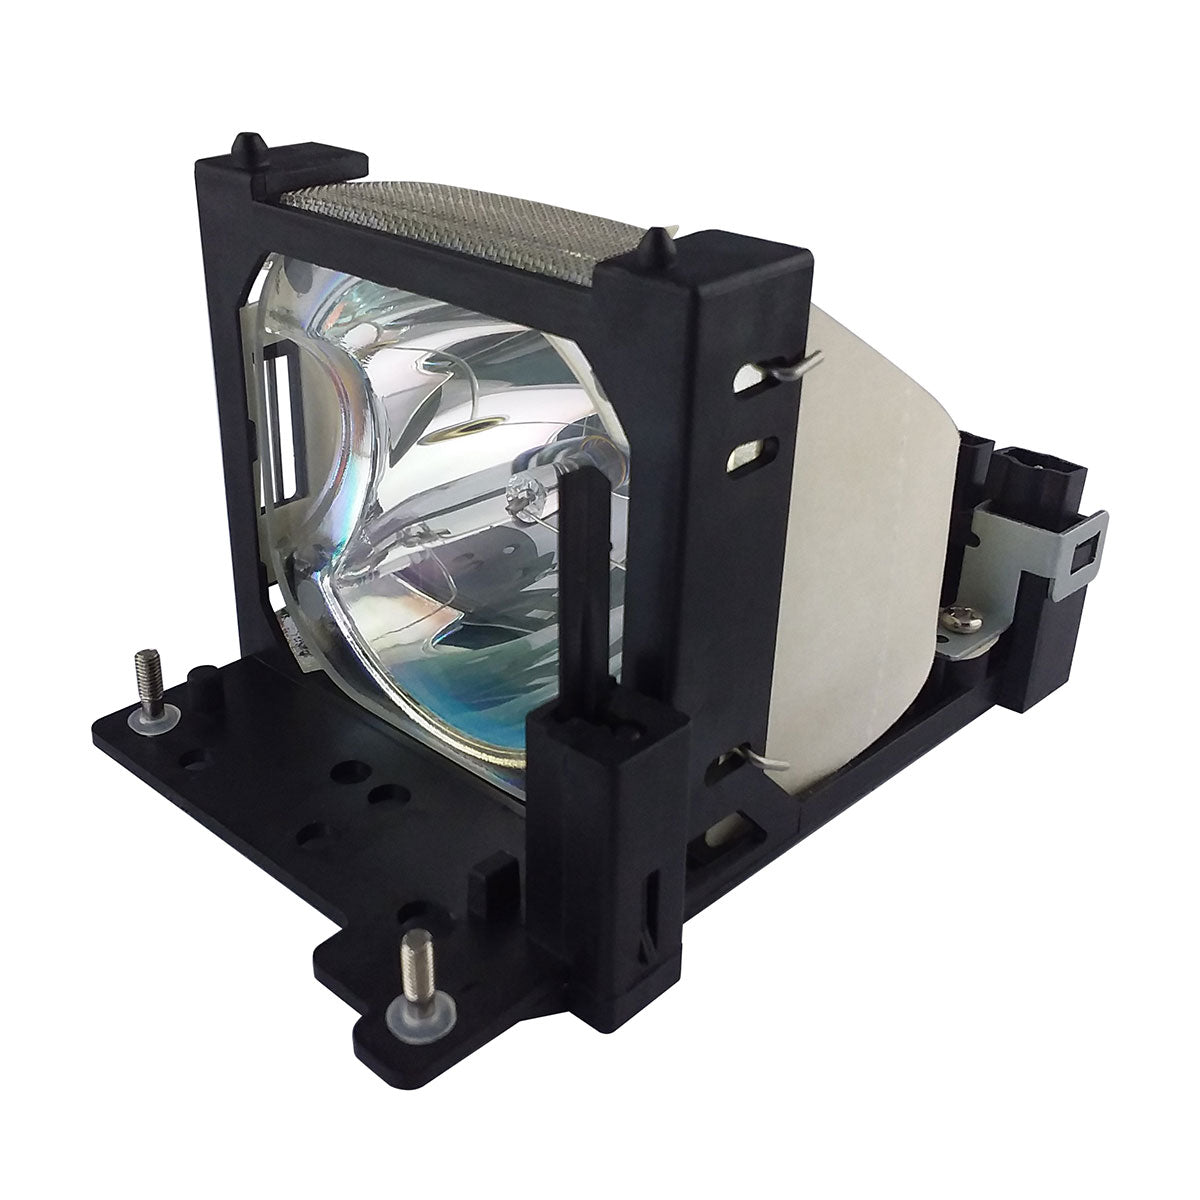 Viewsonic M-LP-0829-0030 Compatible Projector Lamp Module